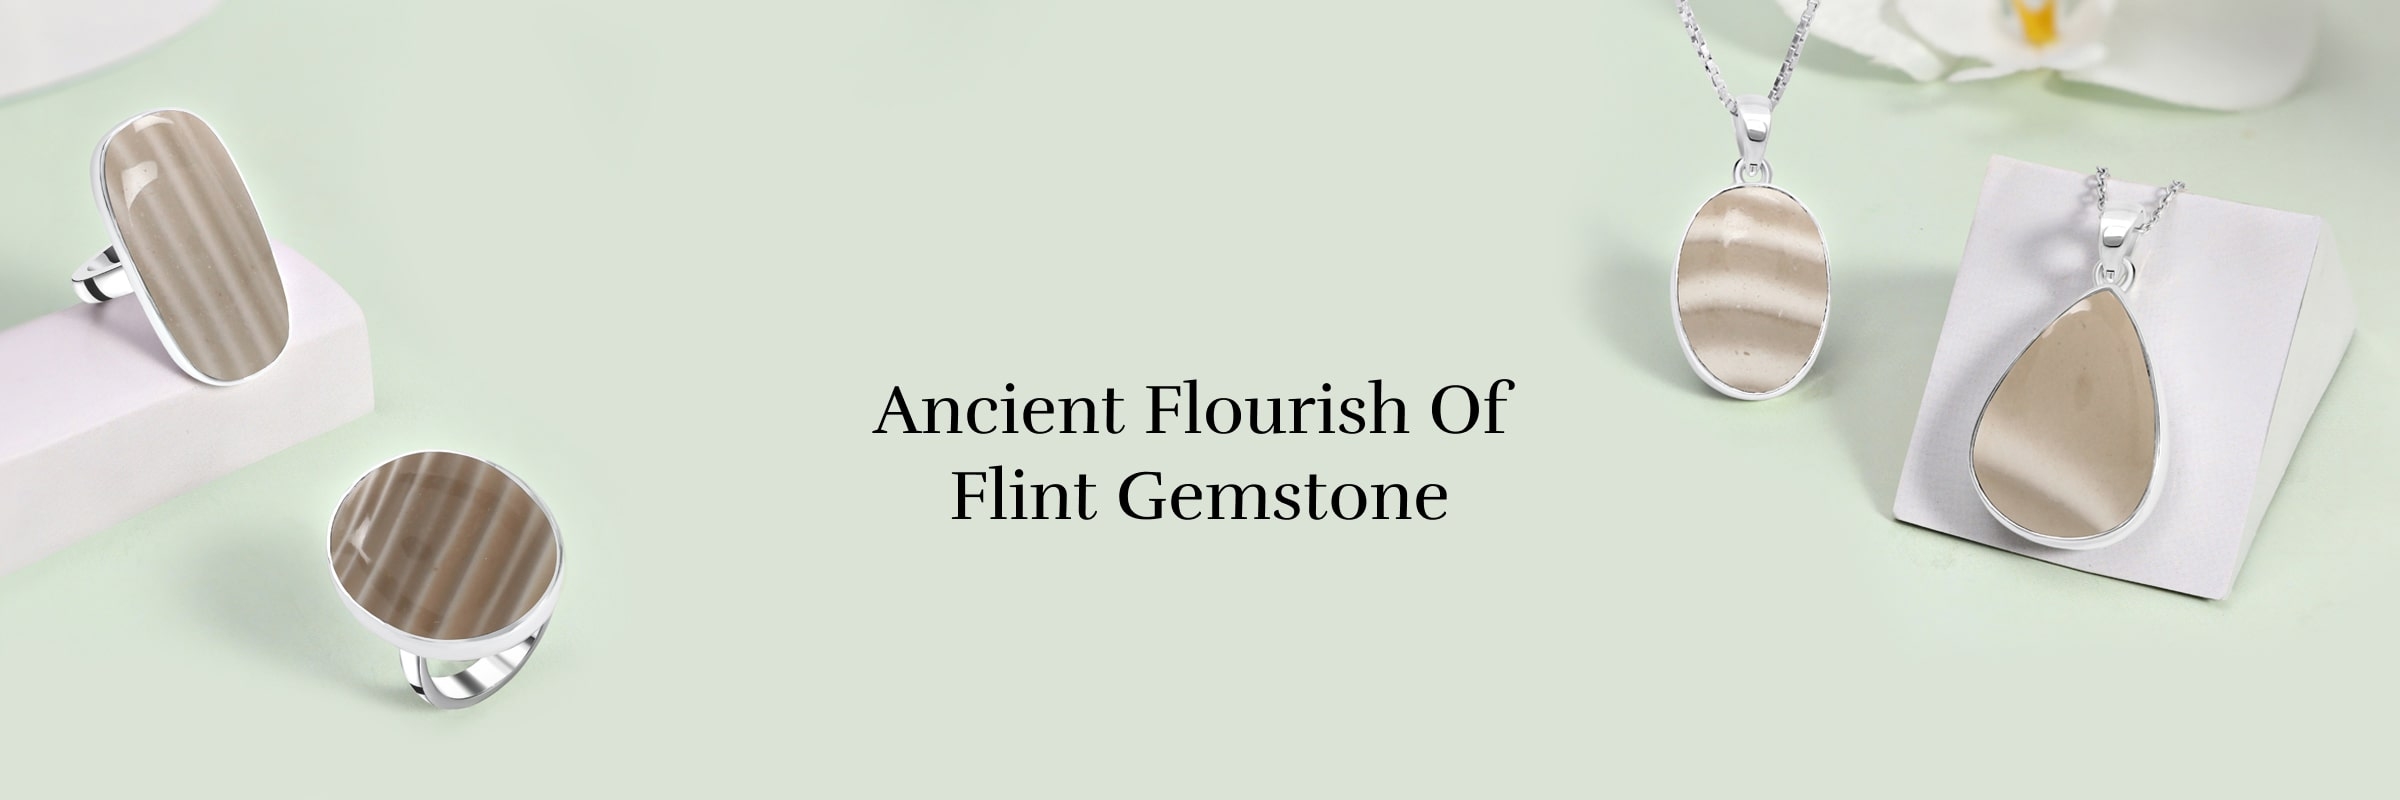 History of Flint Gemstone